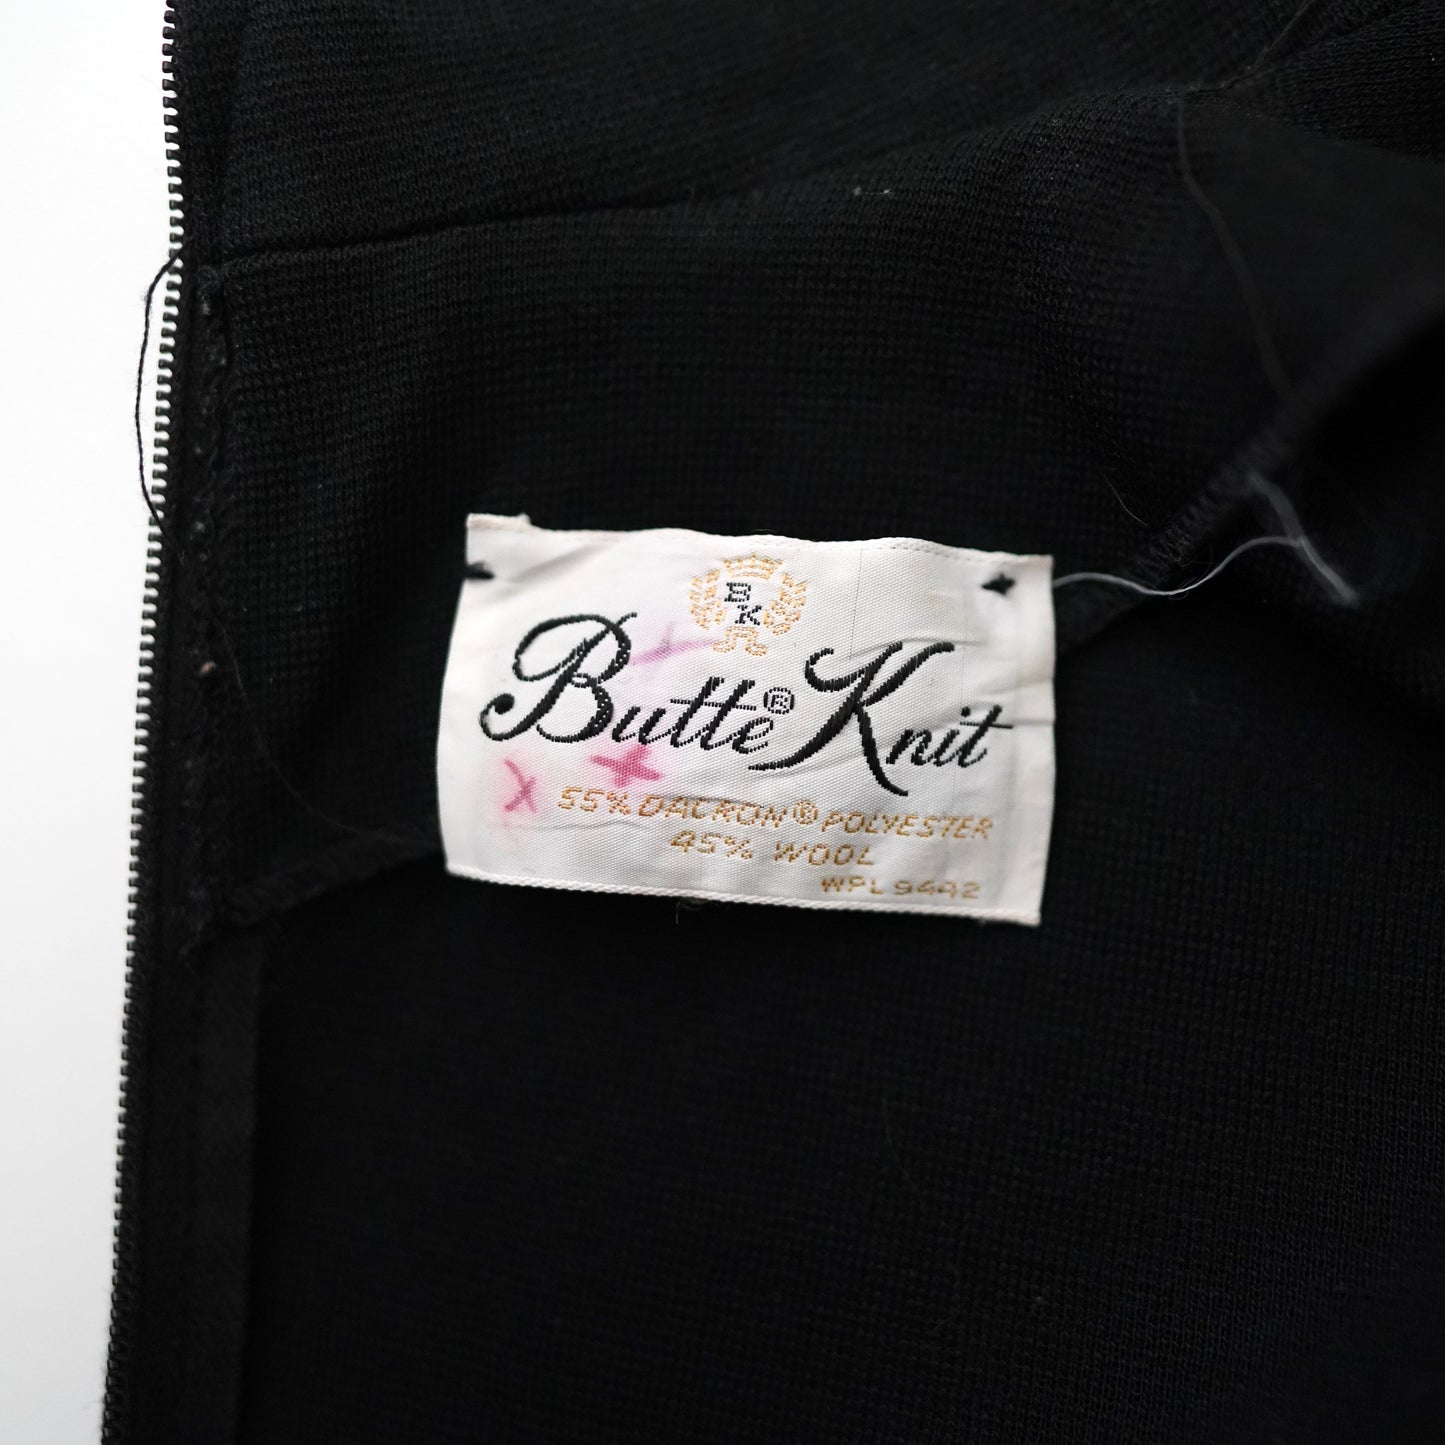 Butte Knit one piece